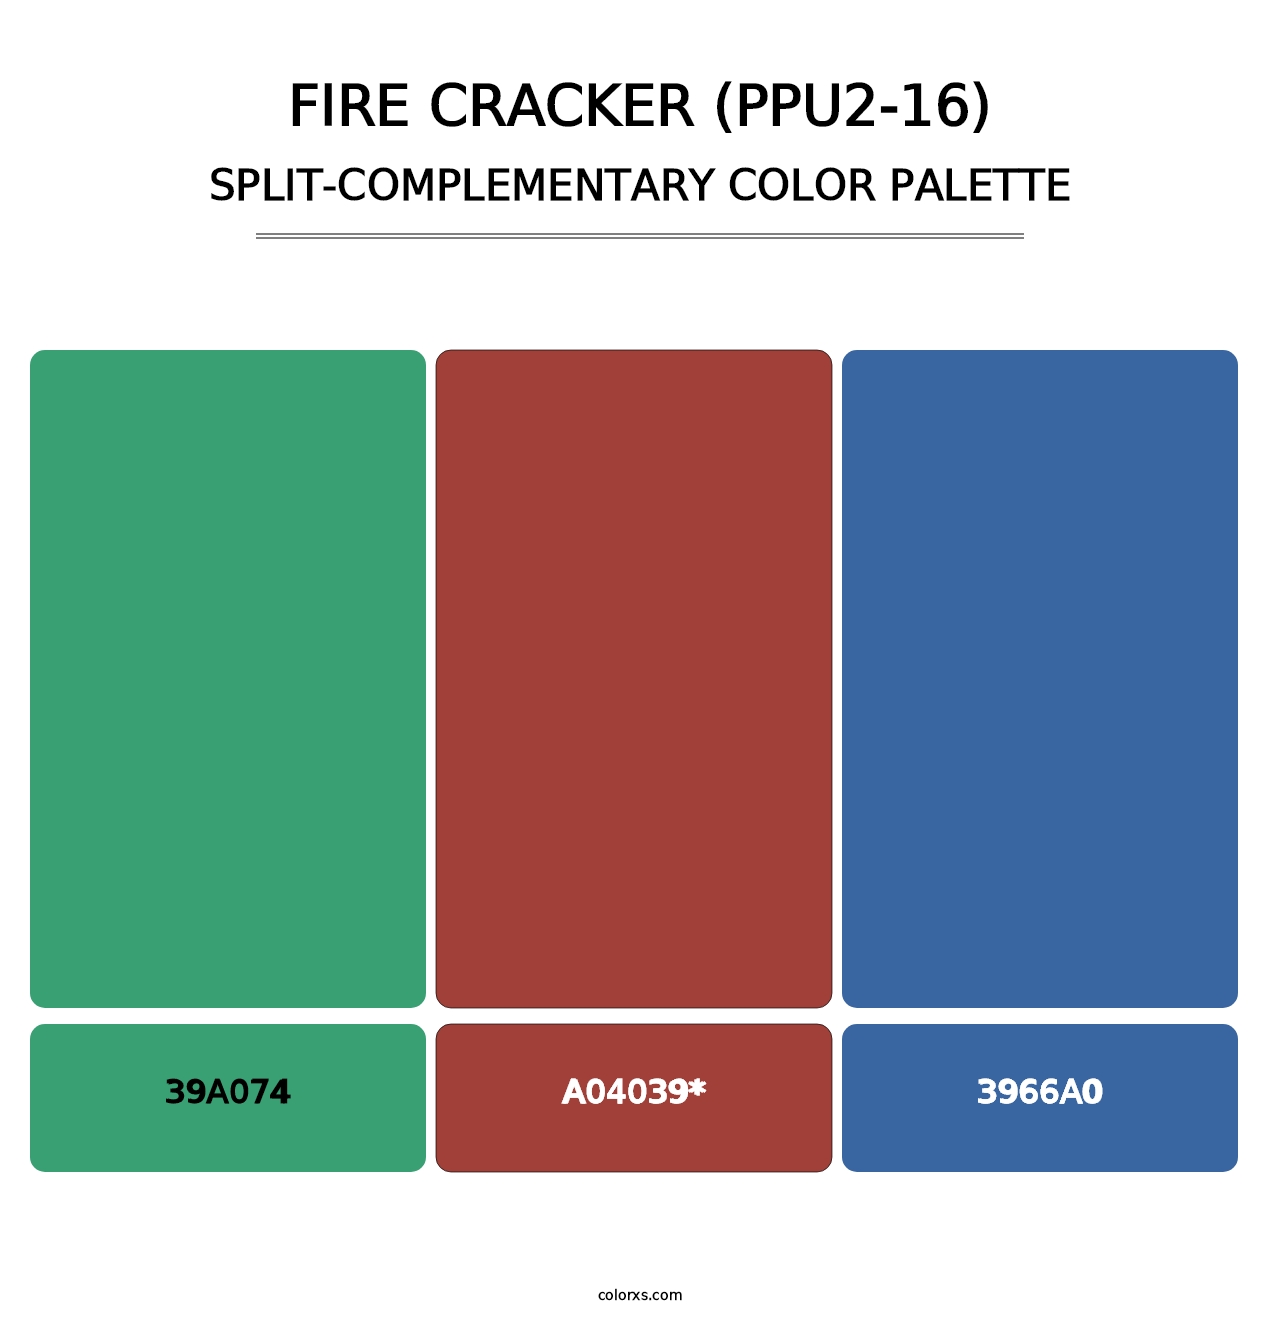 Fire Cracker (PPU2-16) - Split-Complementary Color Palette